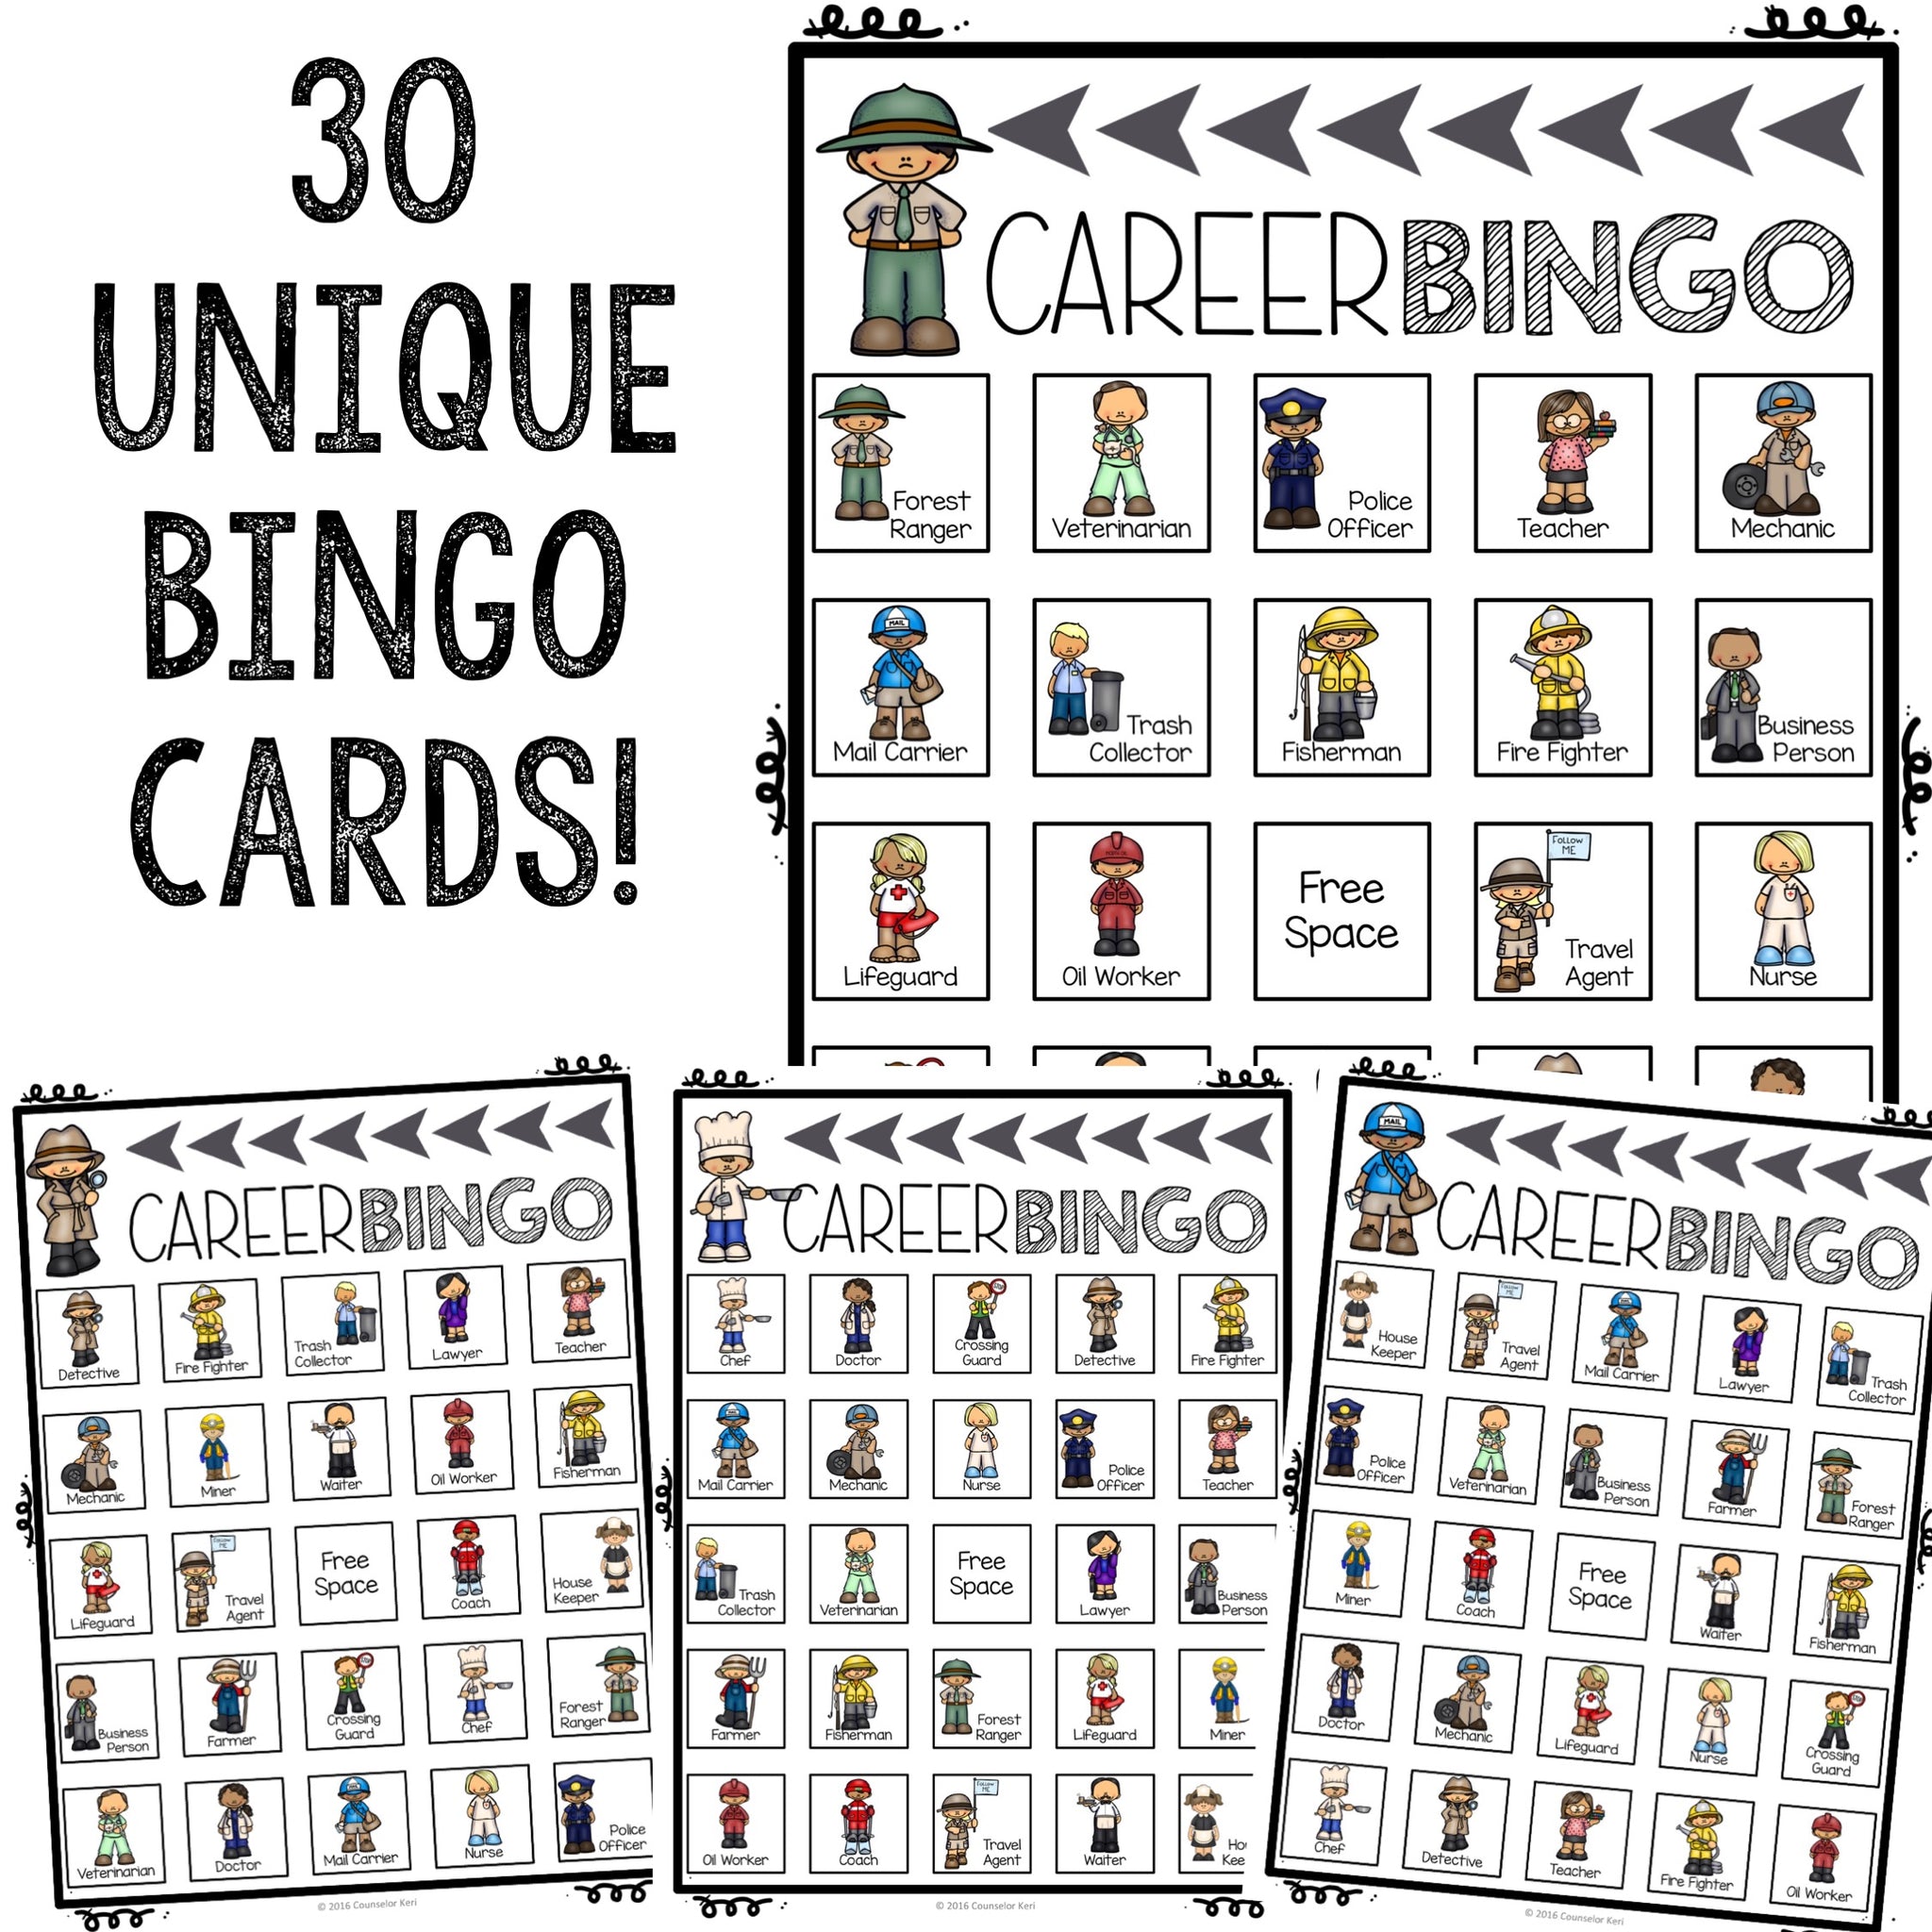 CMOP-E Person & Occupation Bingo Card